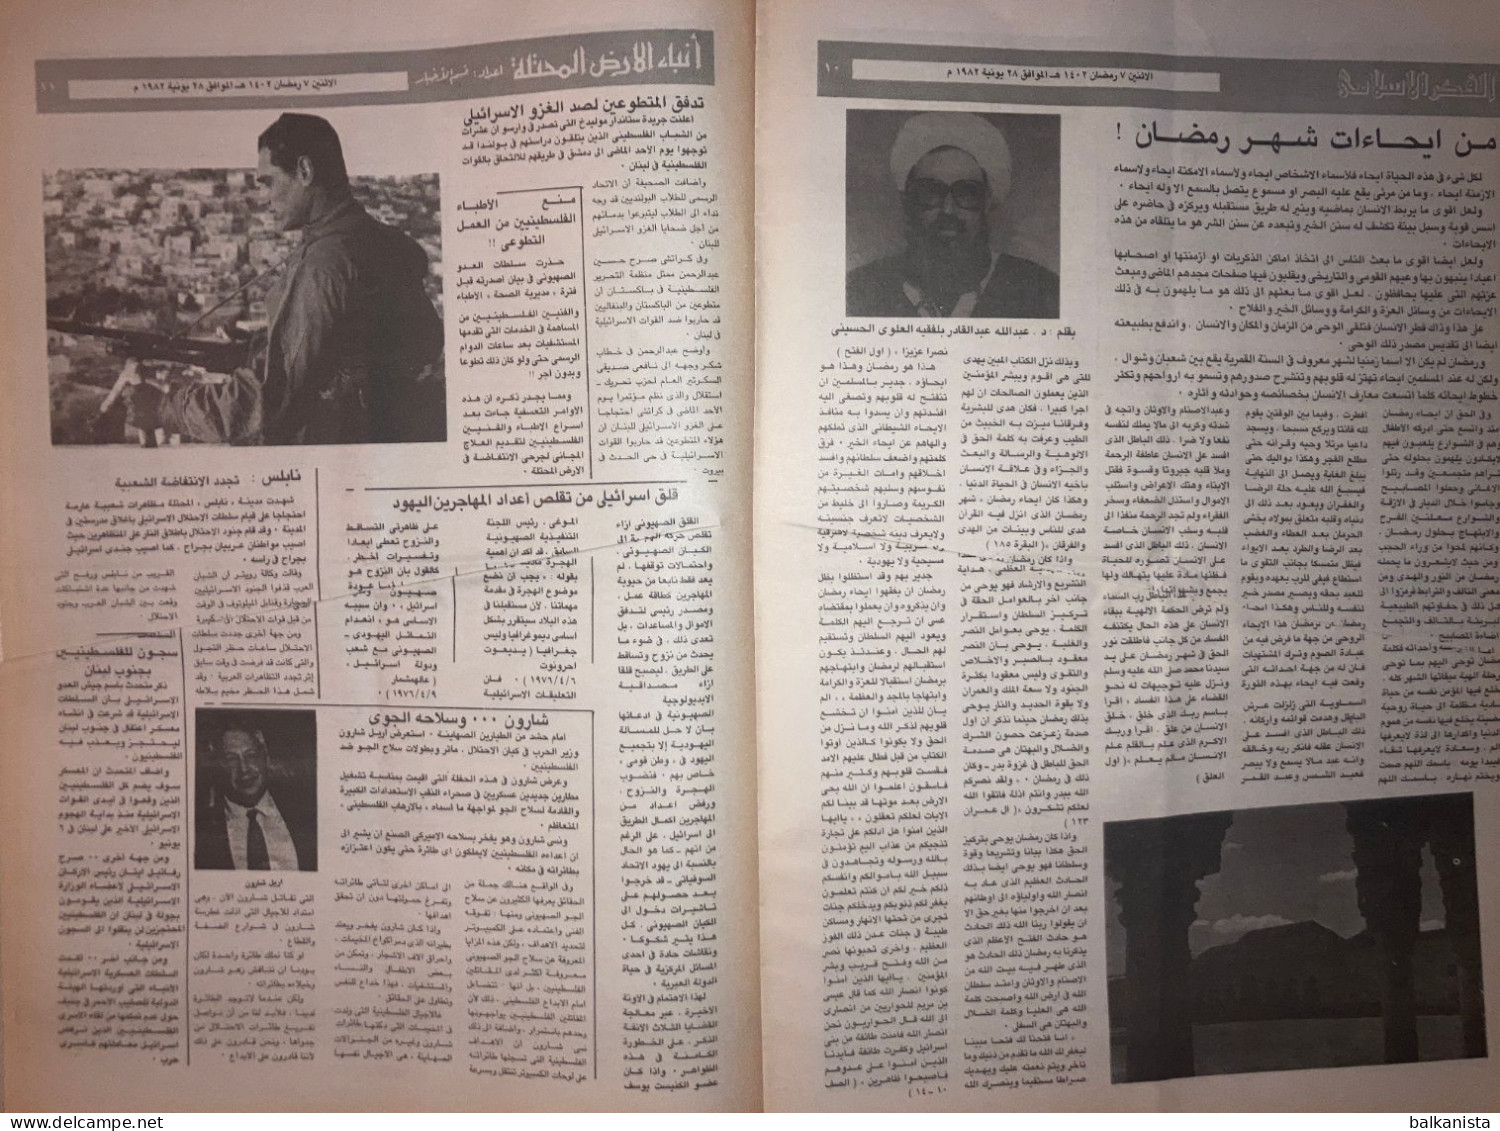 Saudi Arabia Akhbar al-Alam al-Islami Newspaper 28 June 1982 -aa-